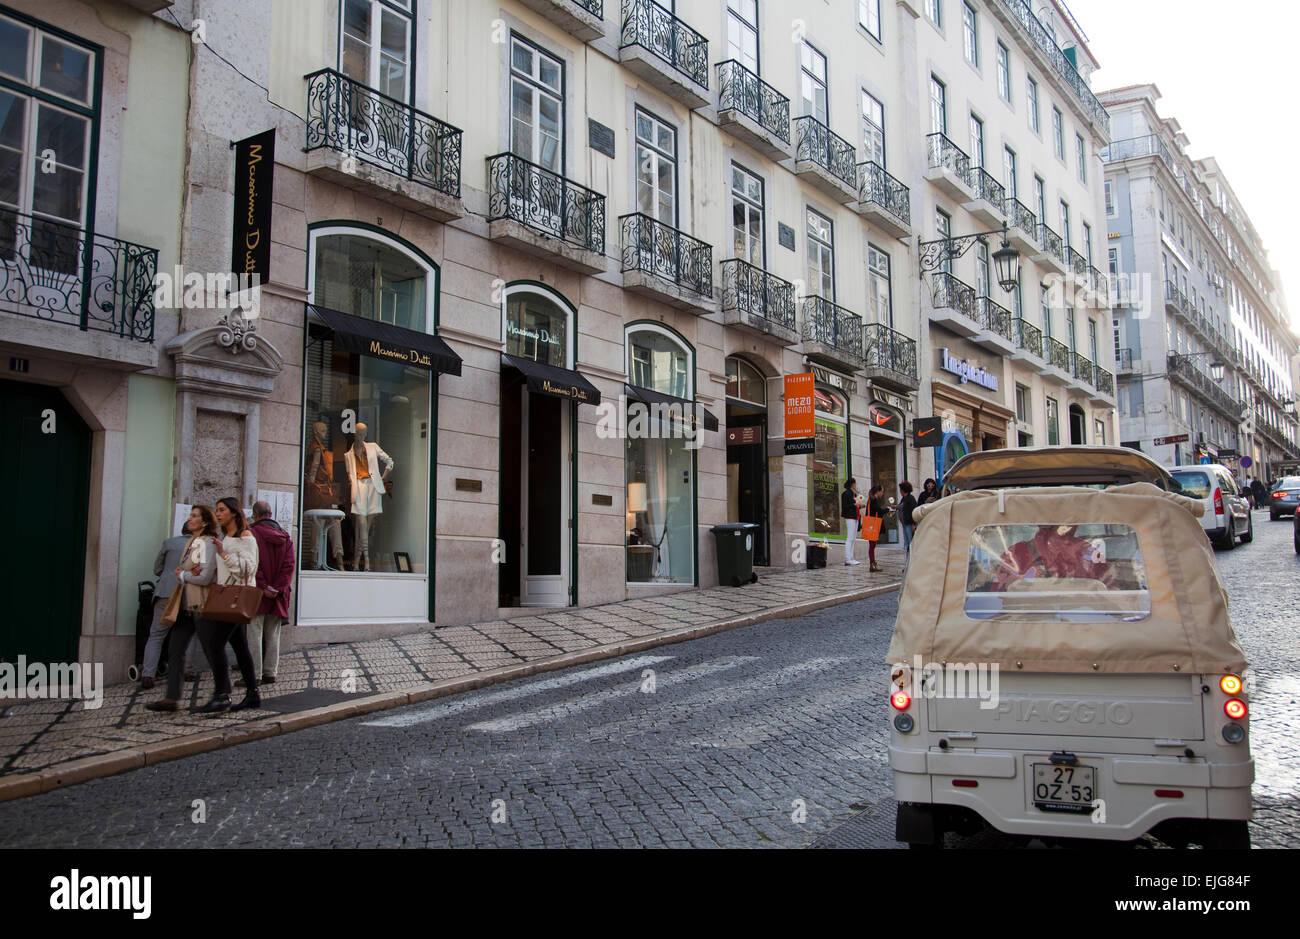 Rua Garrett Shopping area in Chiado in Lisbon - Portugal Stock Photo